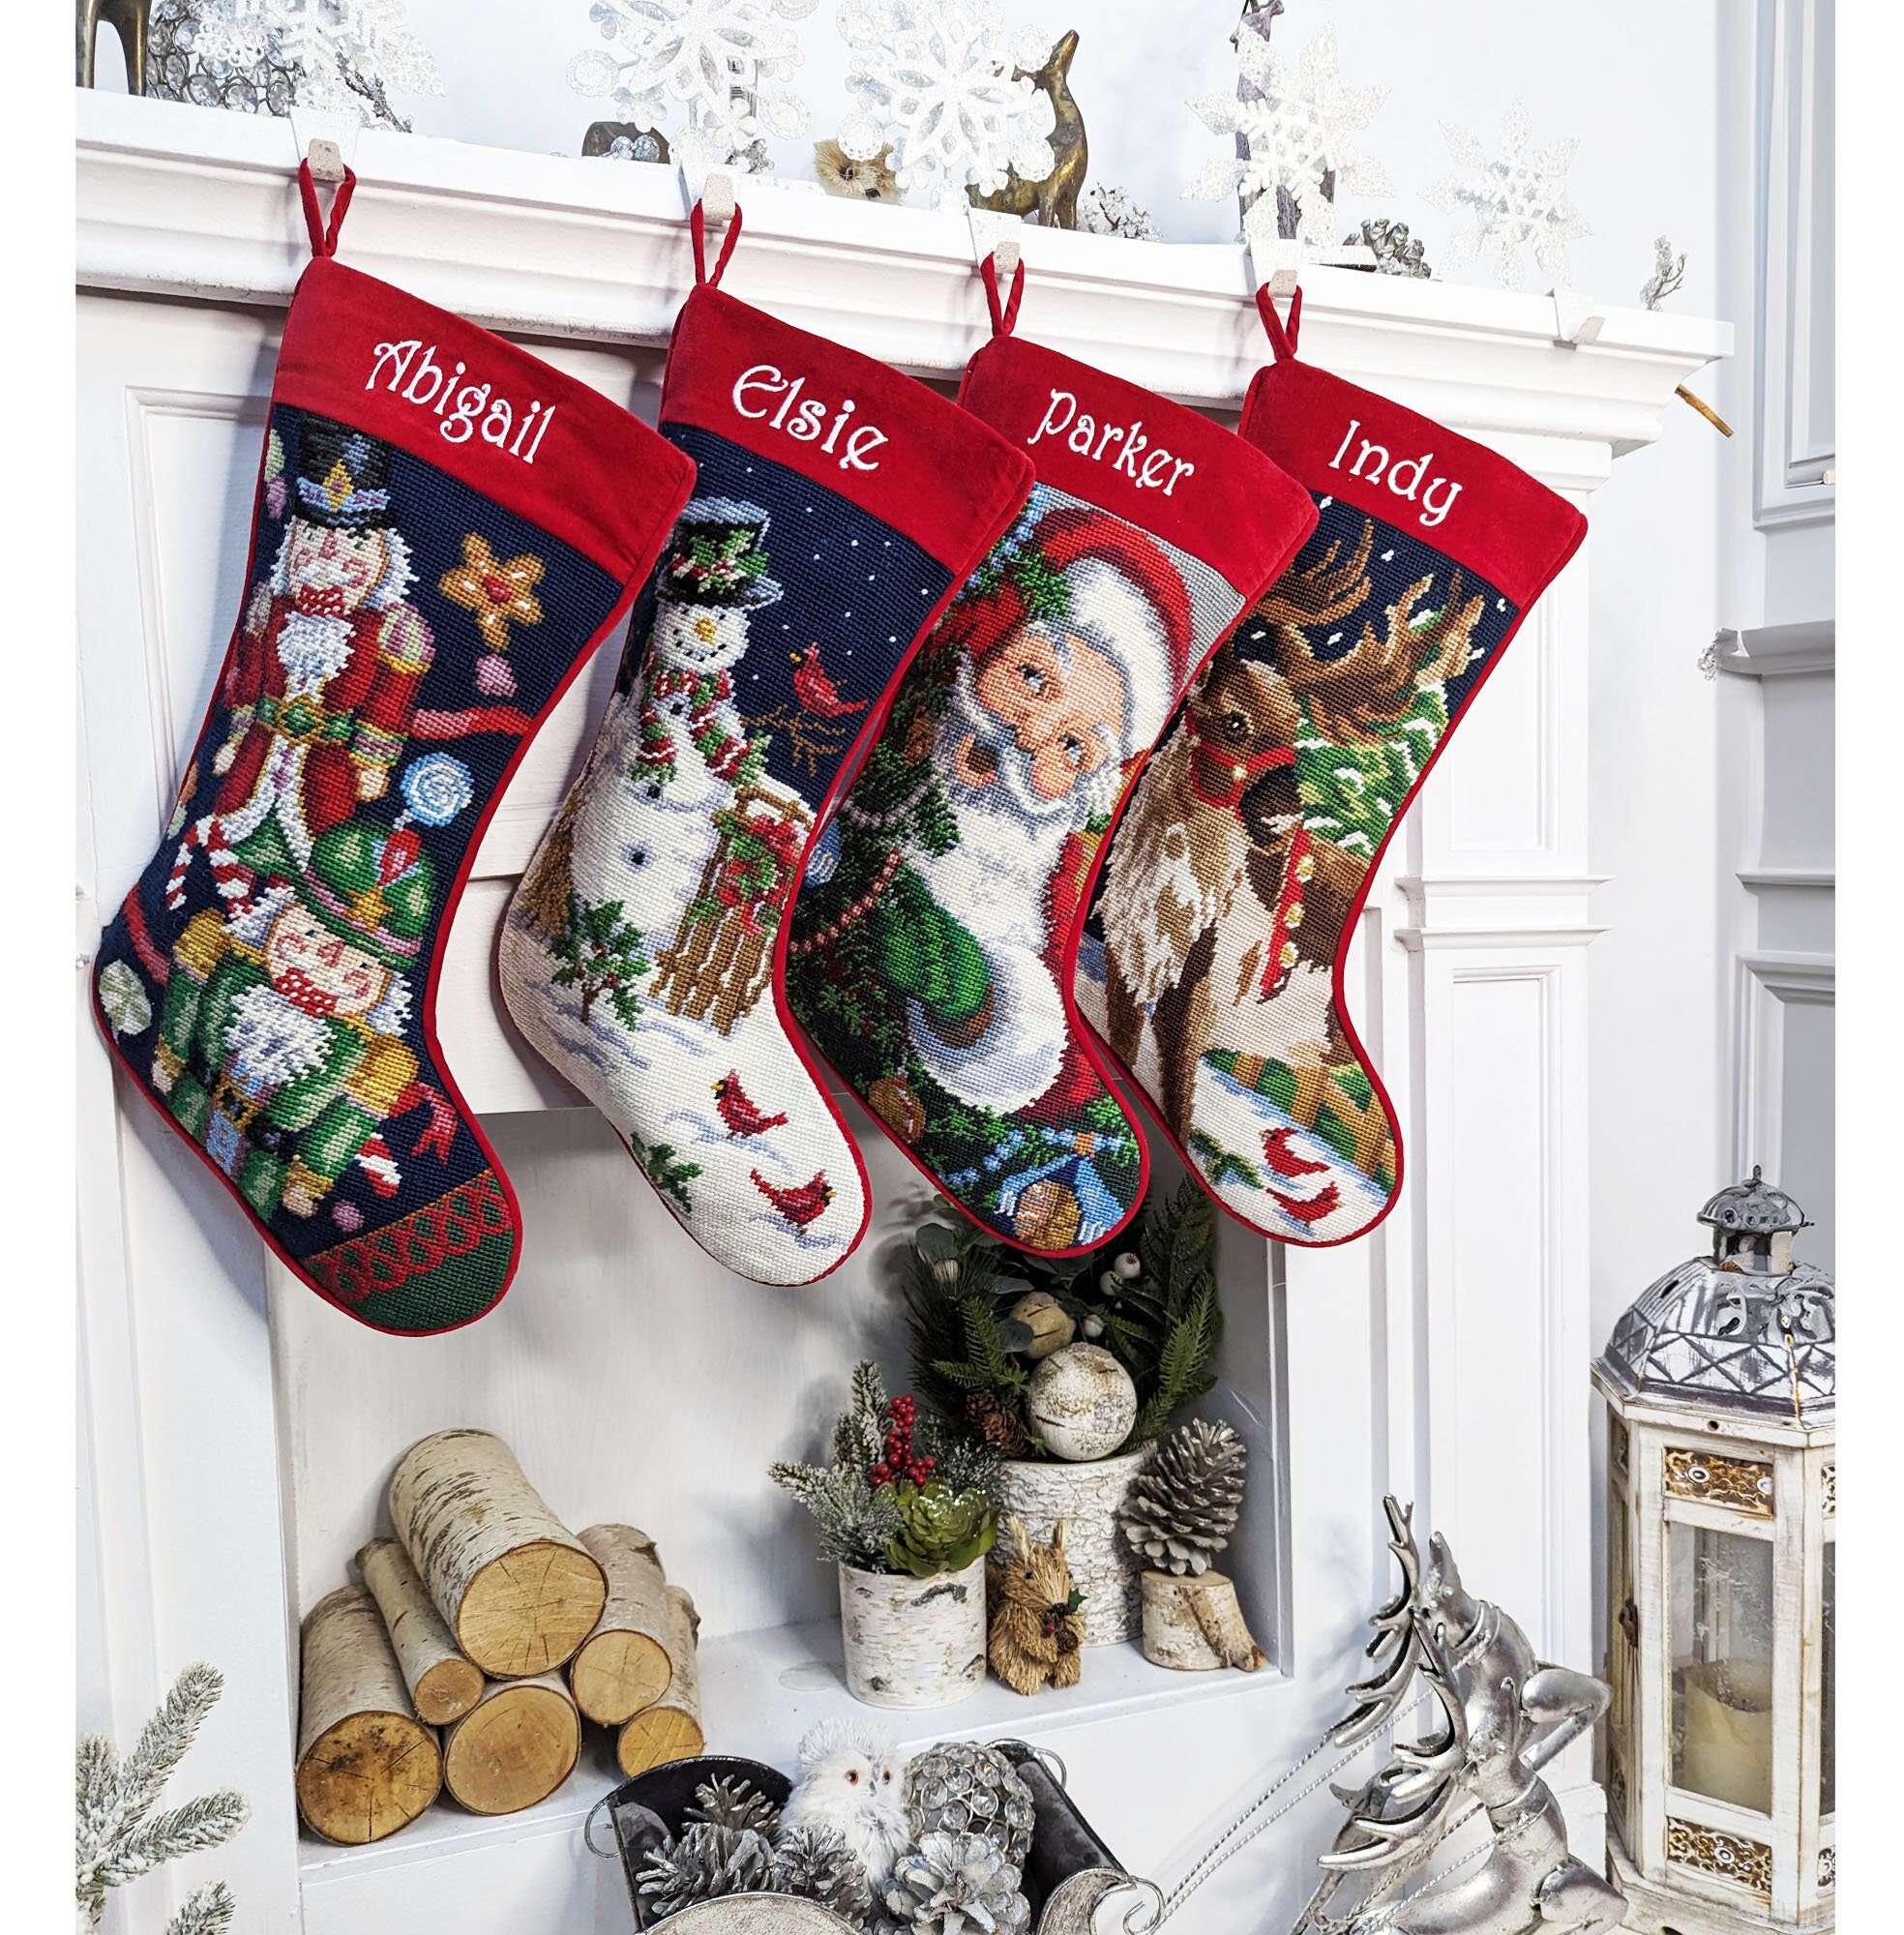 BOLSWJKJR1 Personalized Knitted Christmas Stocking with Name, Christmas Trees Snowflake Paw Custom Needlepoint Stockings Set of 4, Embroidery Customized